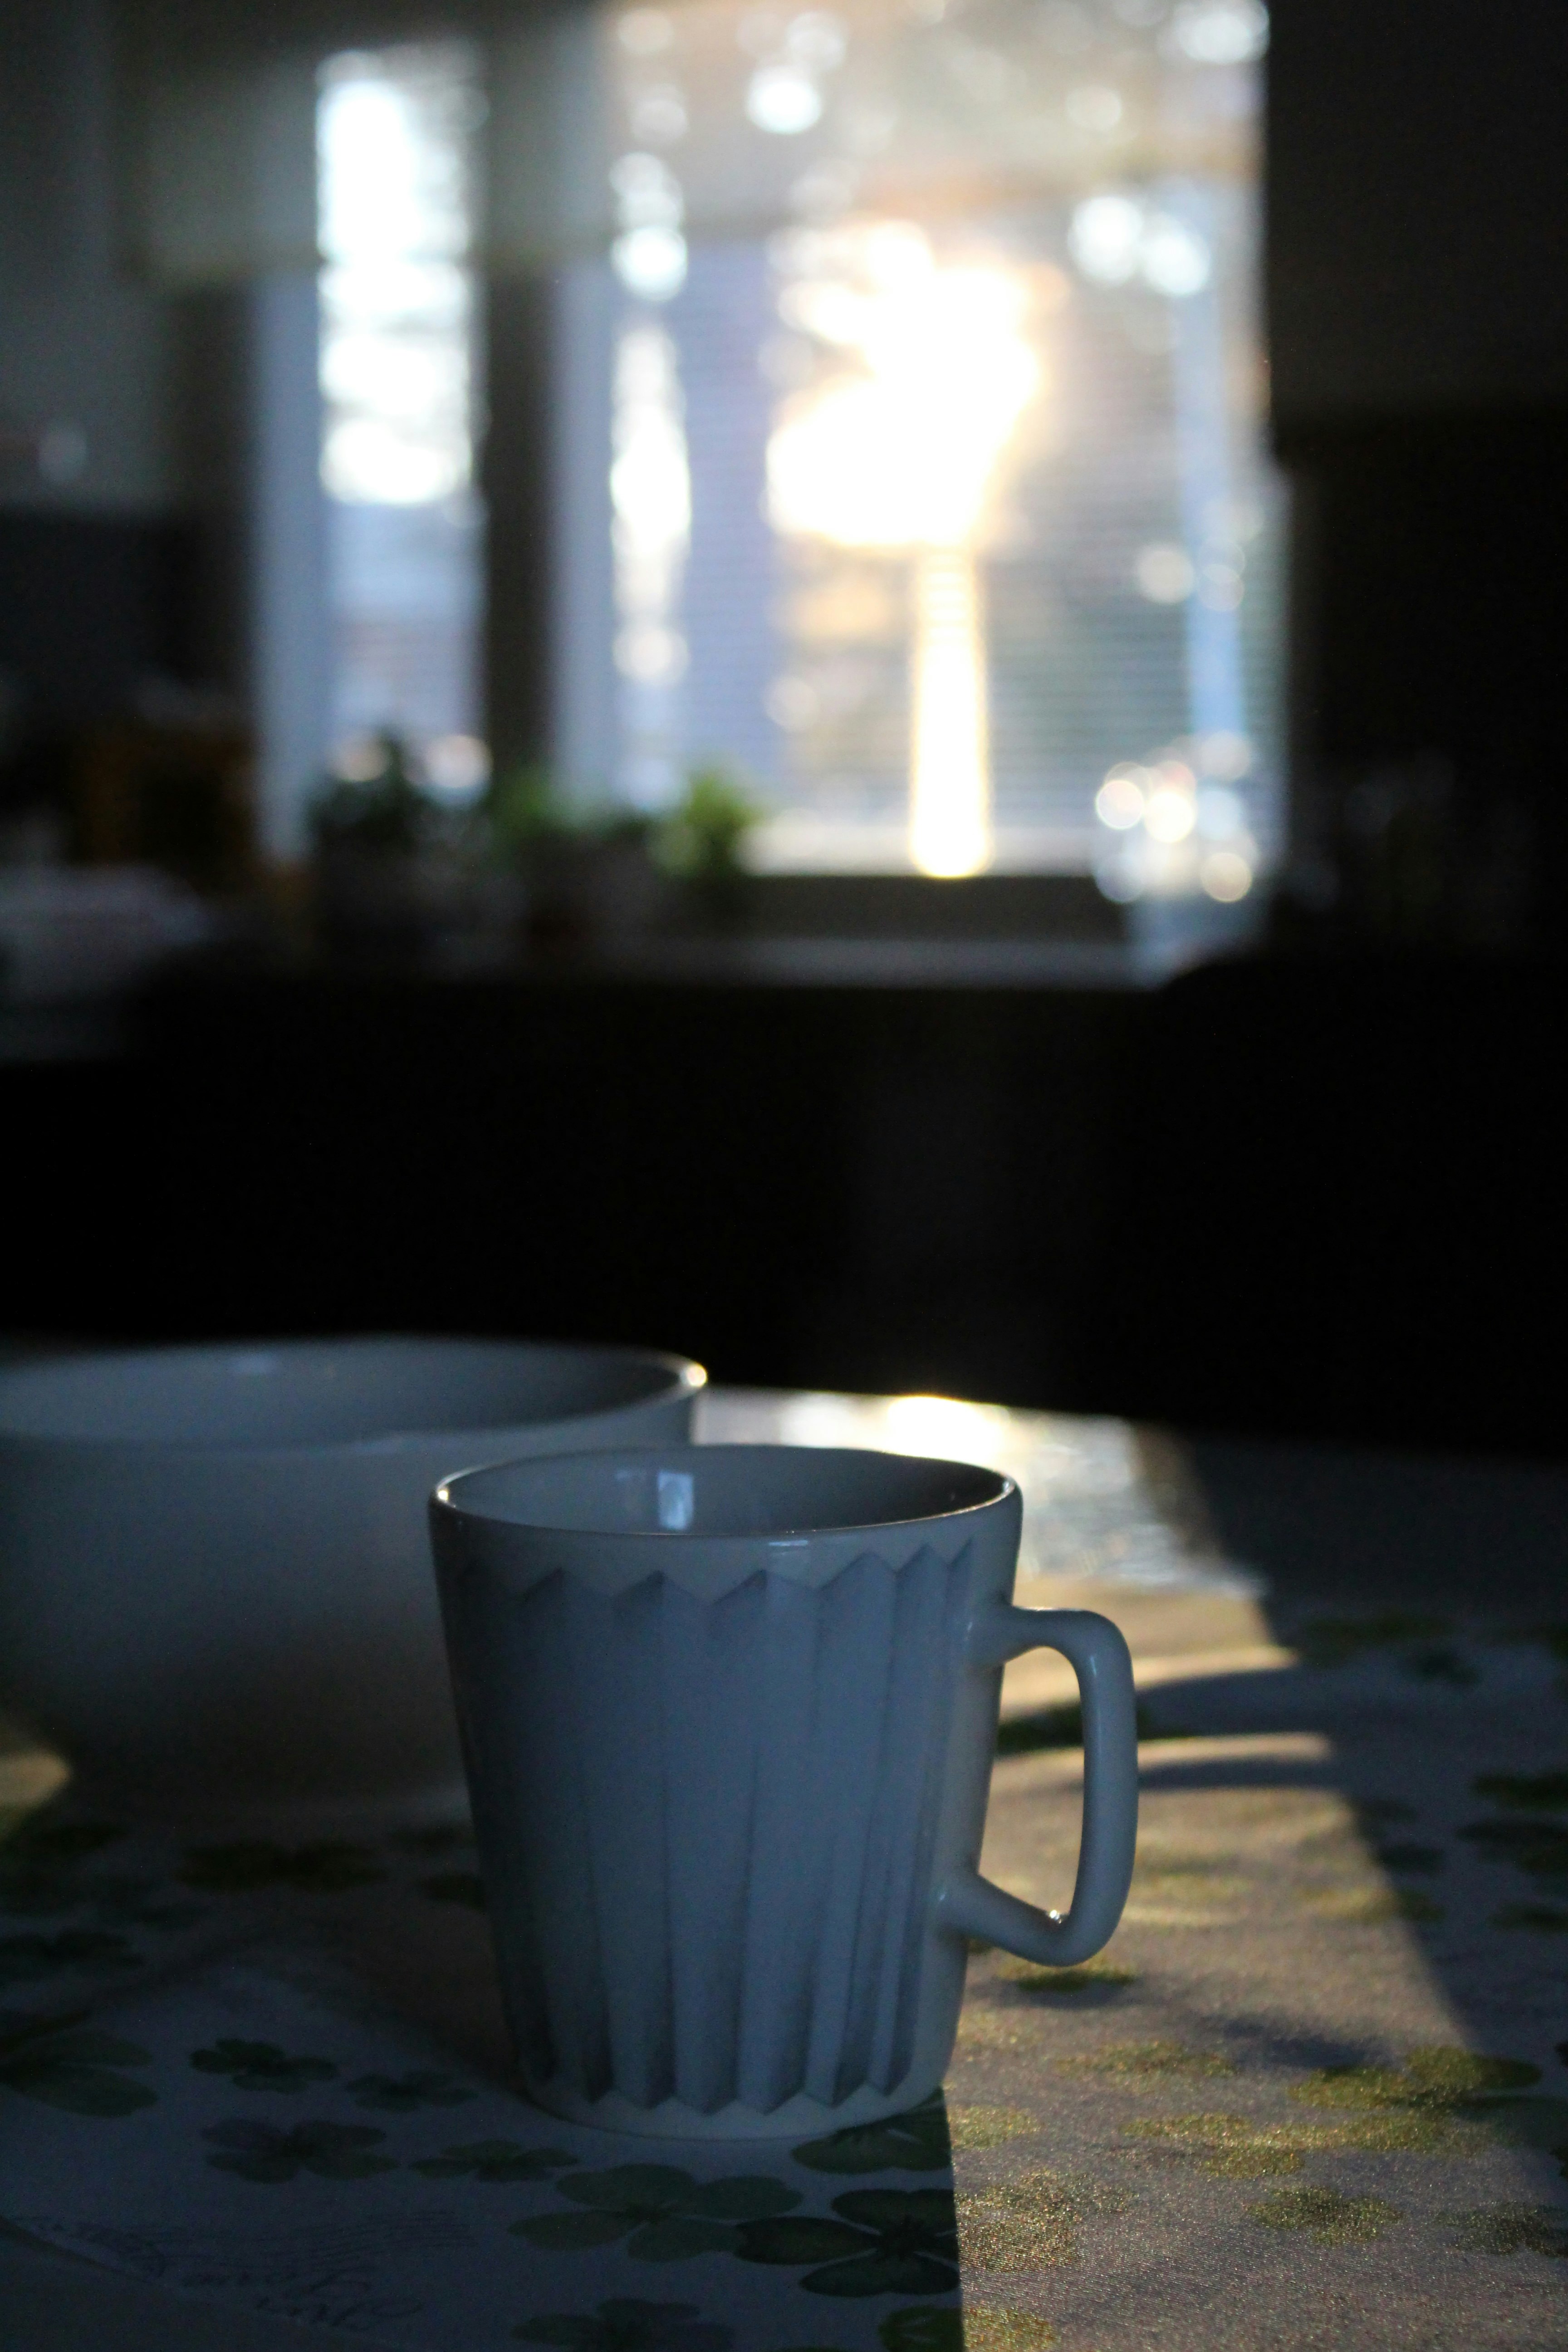 white ceramic mug on table